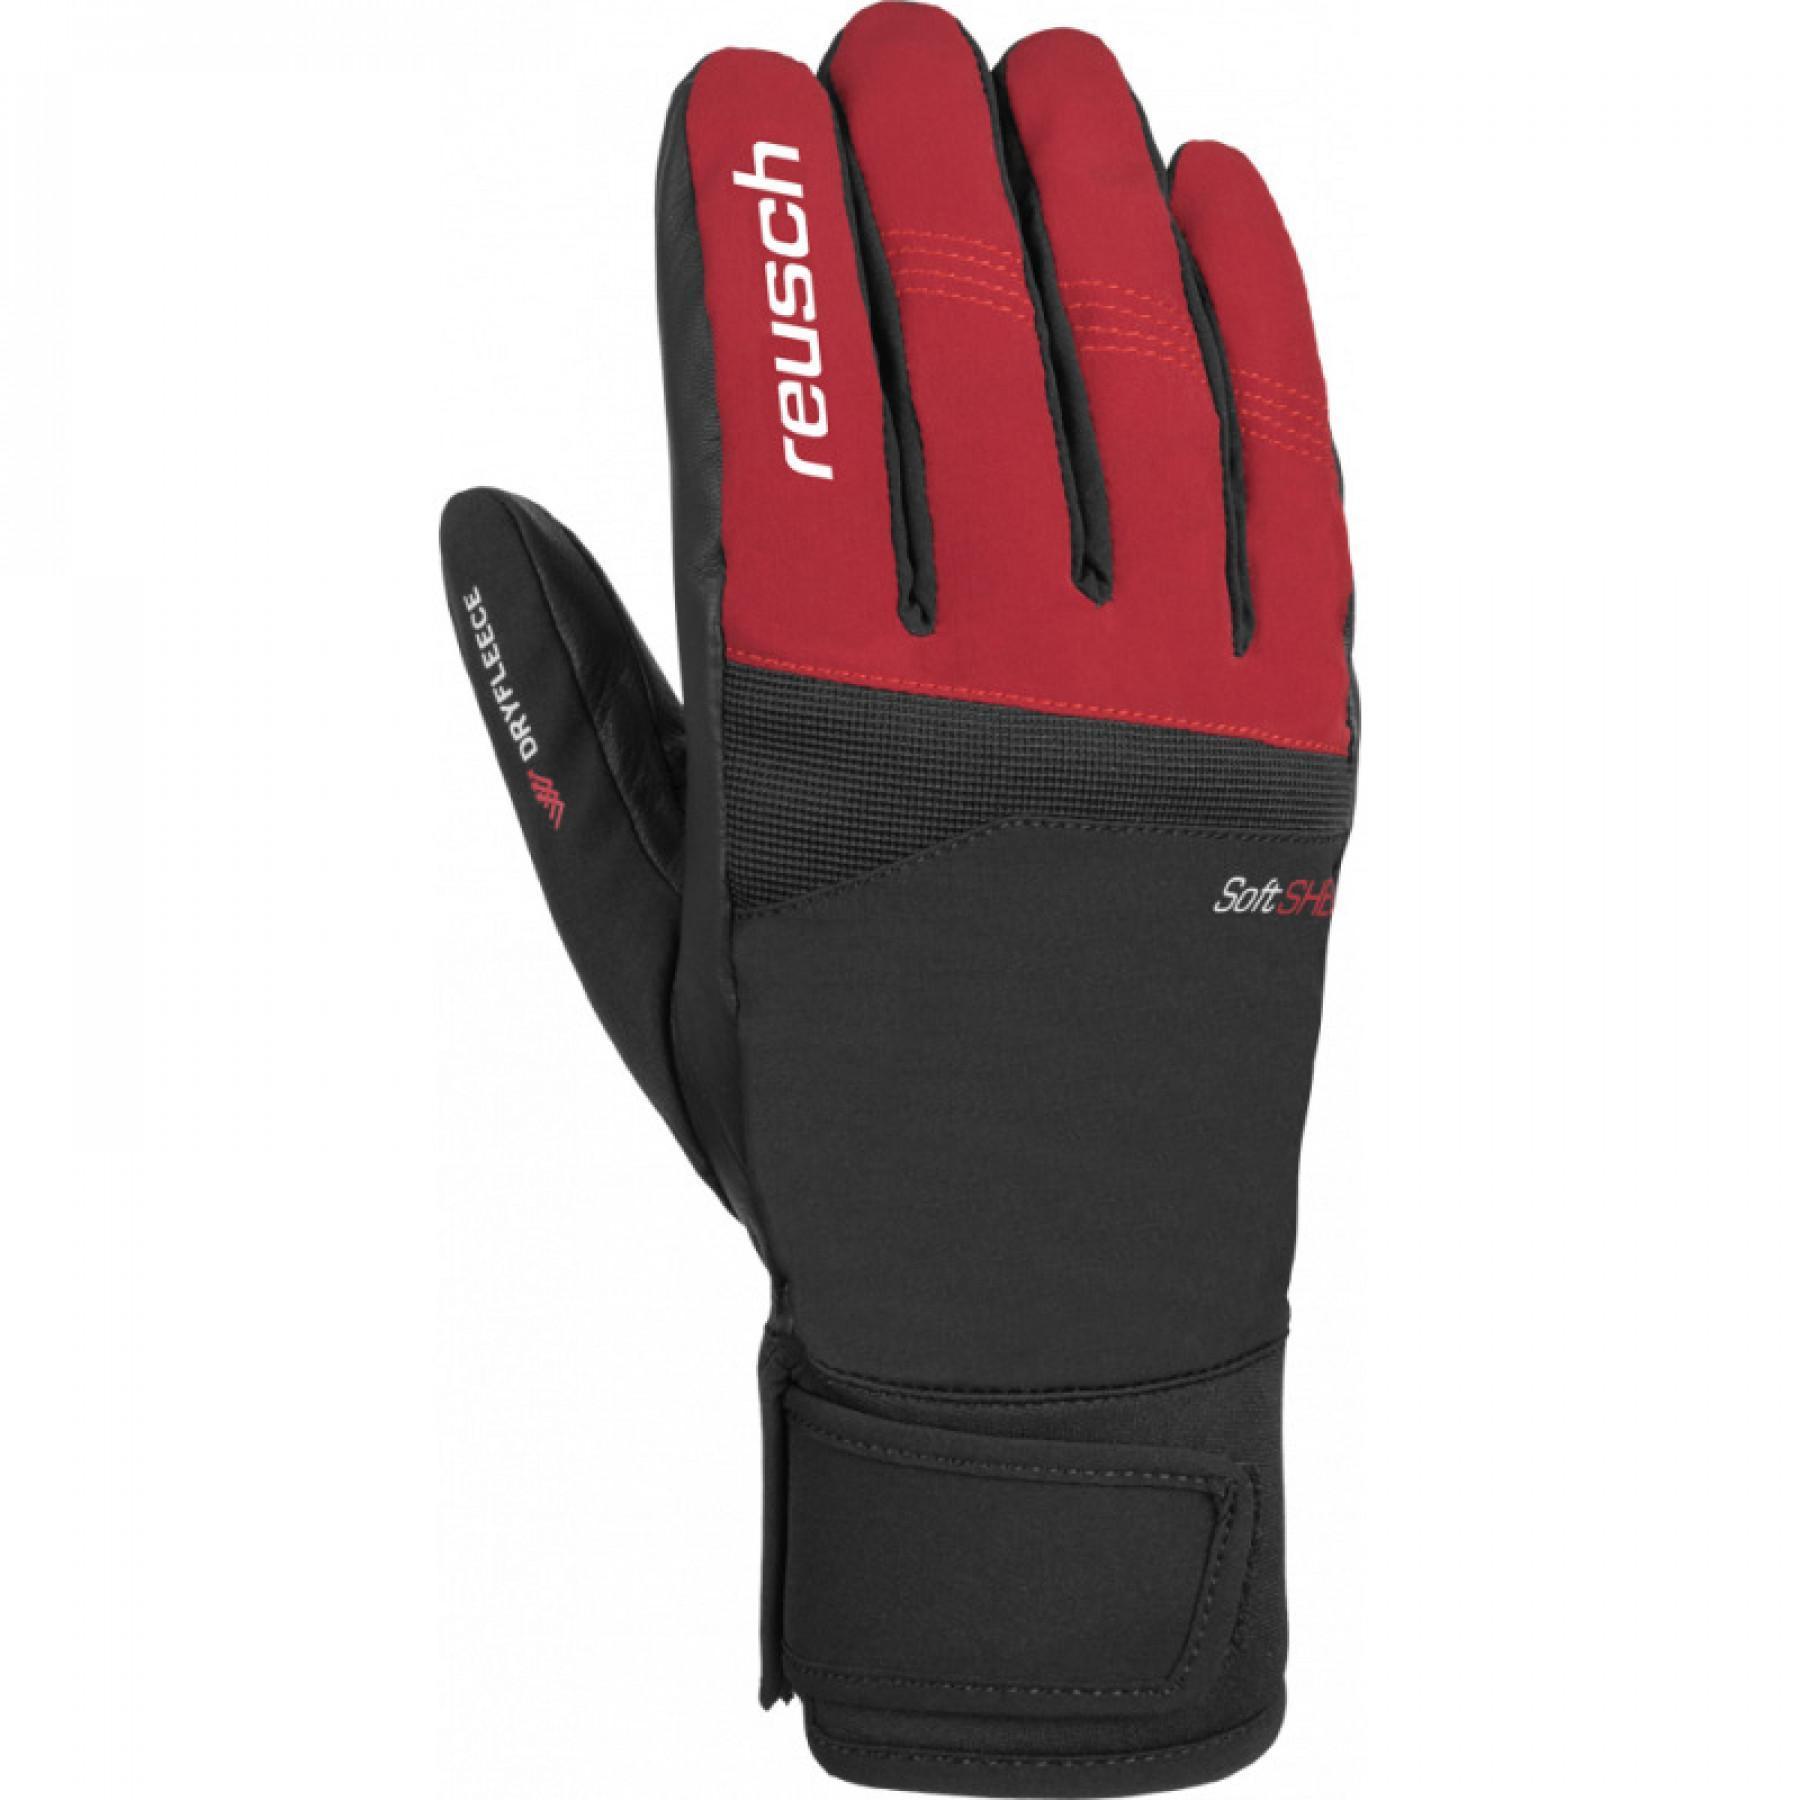 Dry Touch-tec Ryan Gloves Reusch Meida®